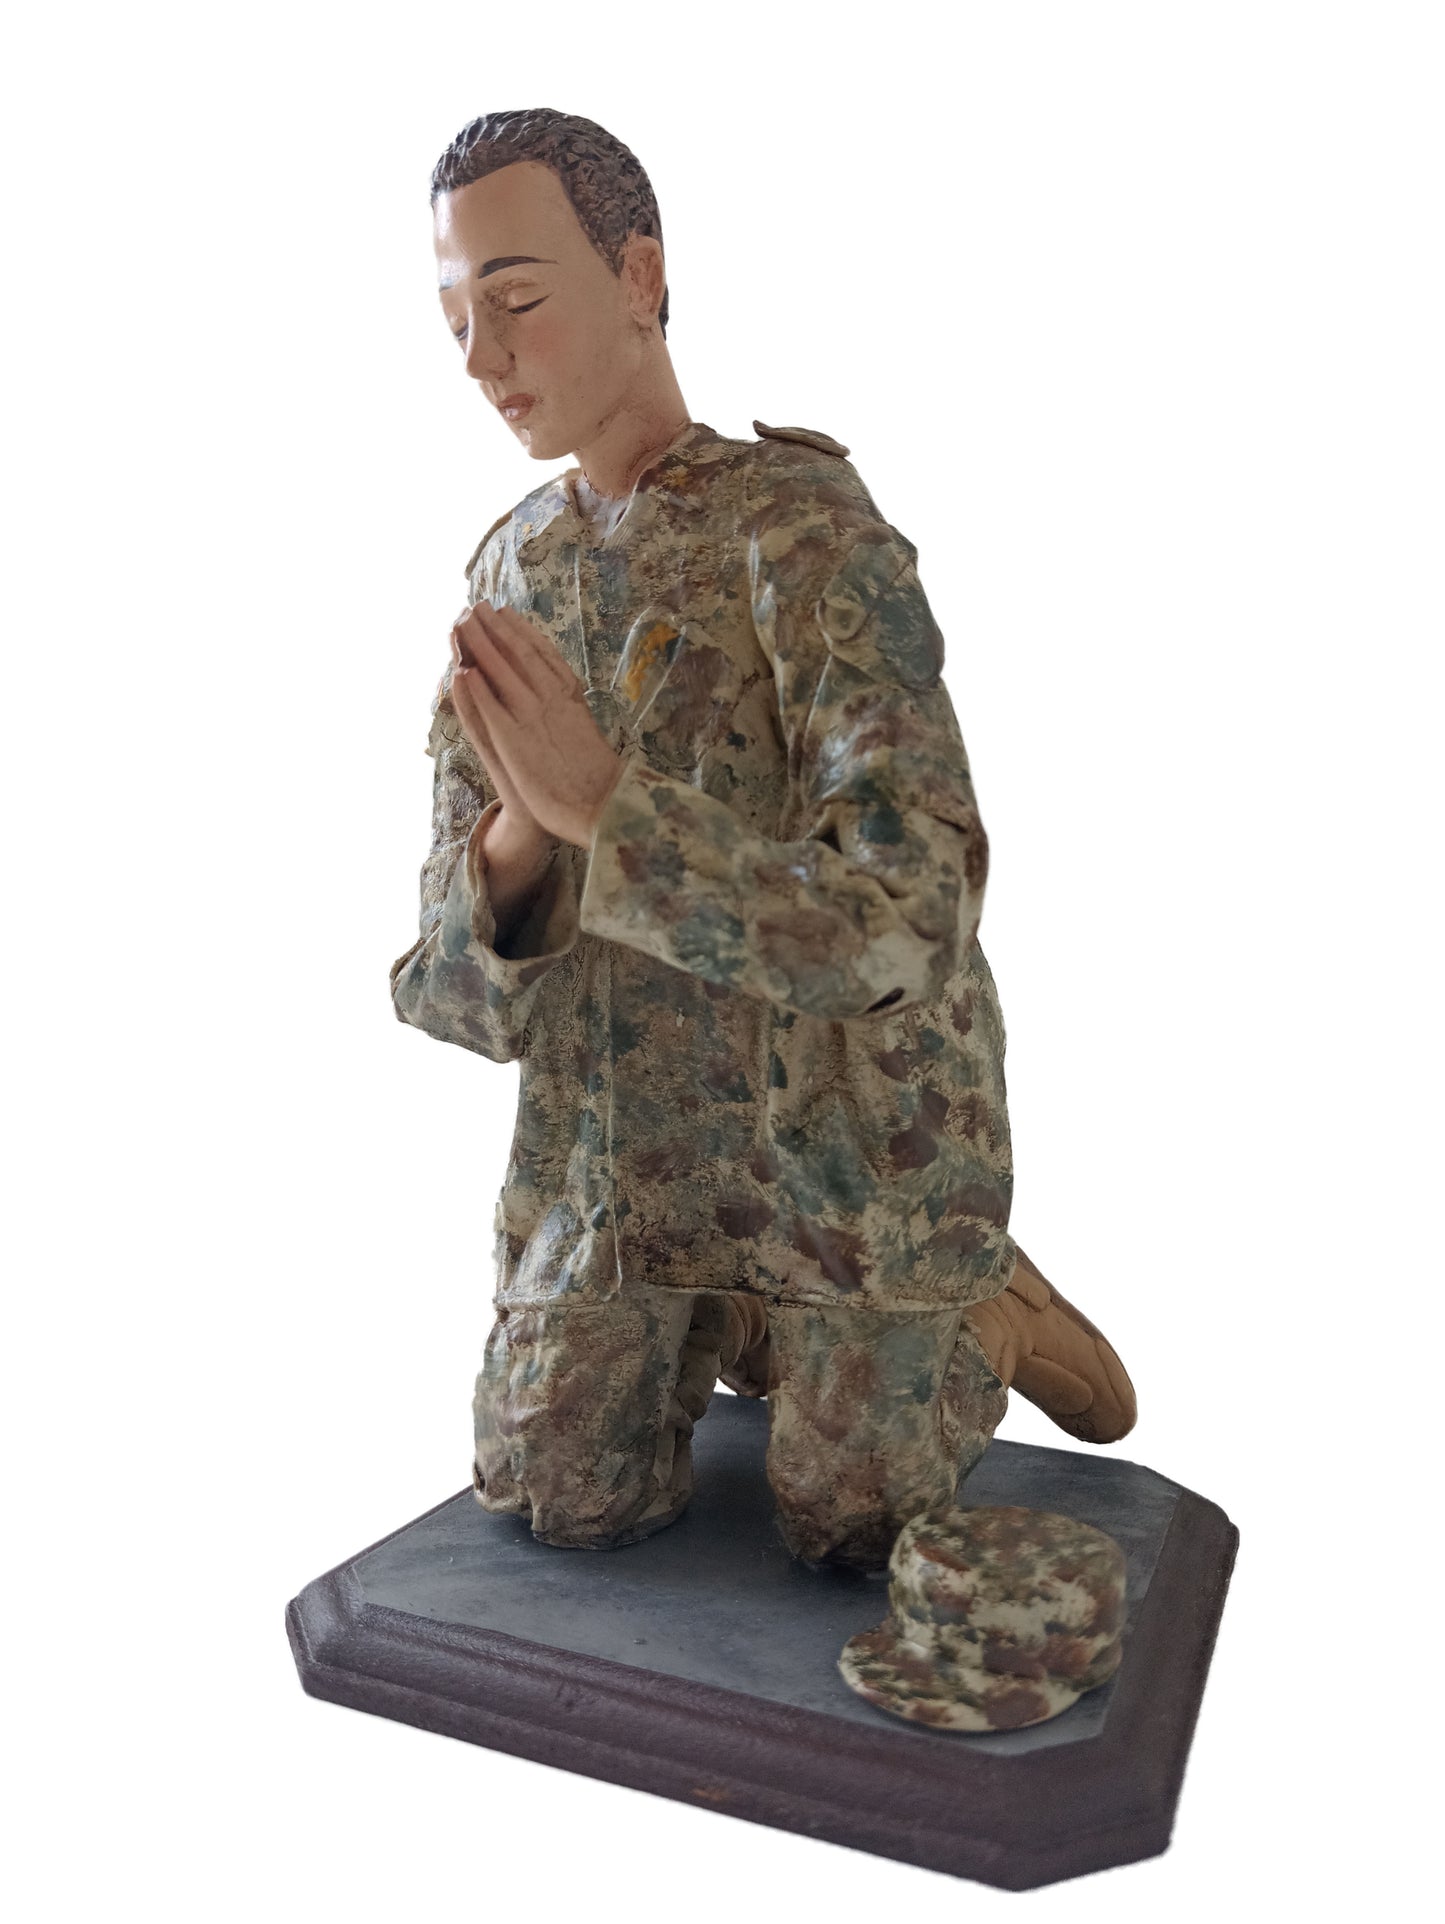 christian art - prayer Military official Memorabilia - KMNK Deco